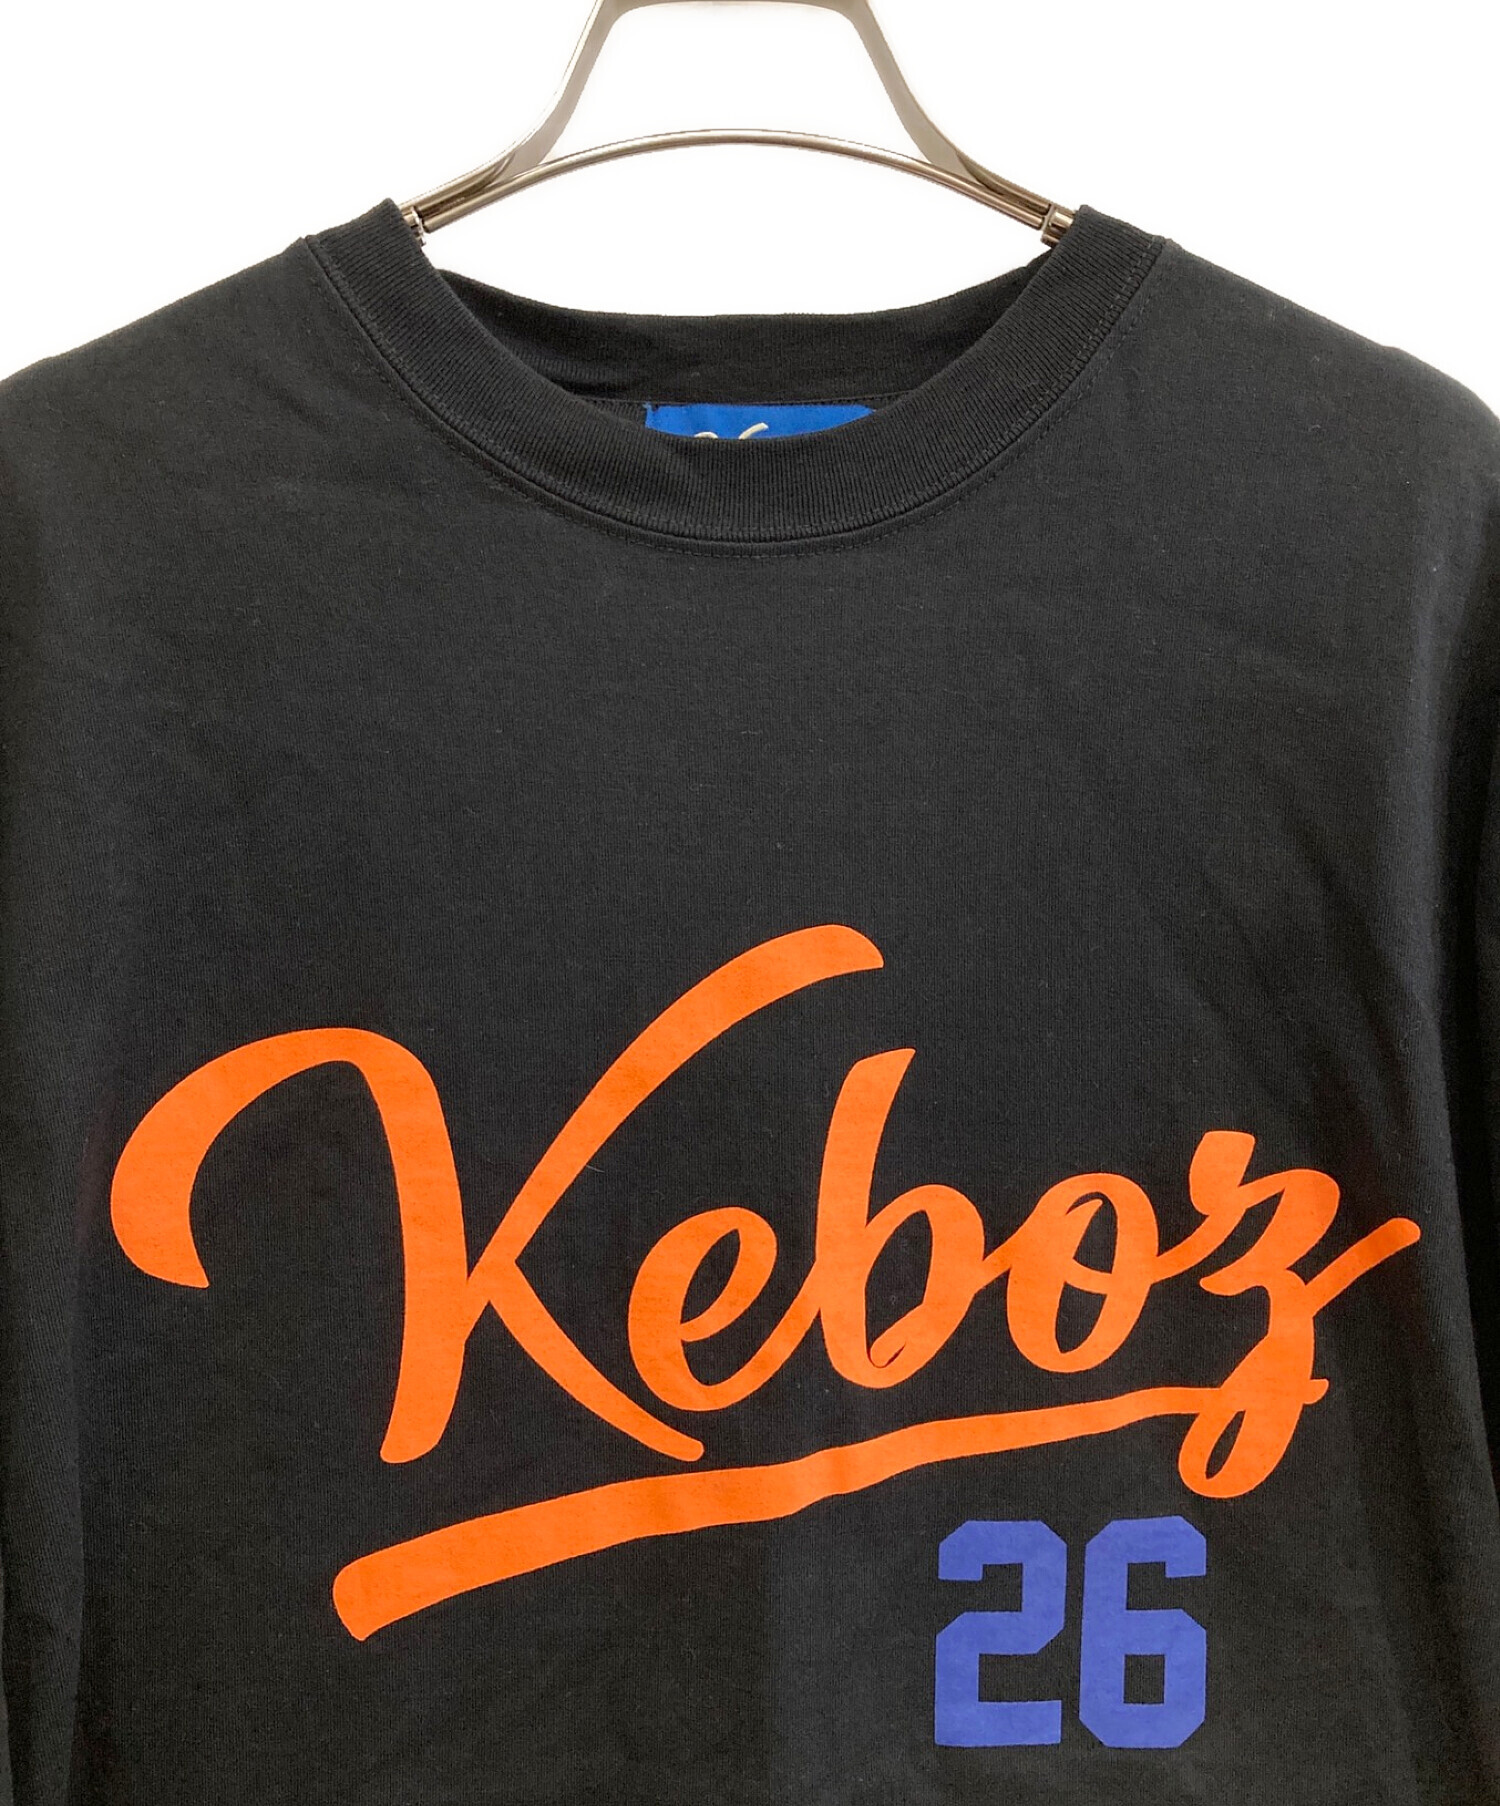 keboz × froclob コラボTシャツ